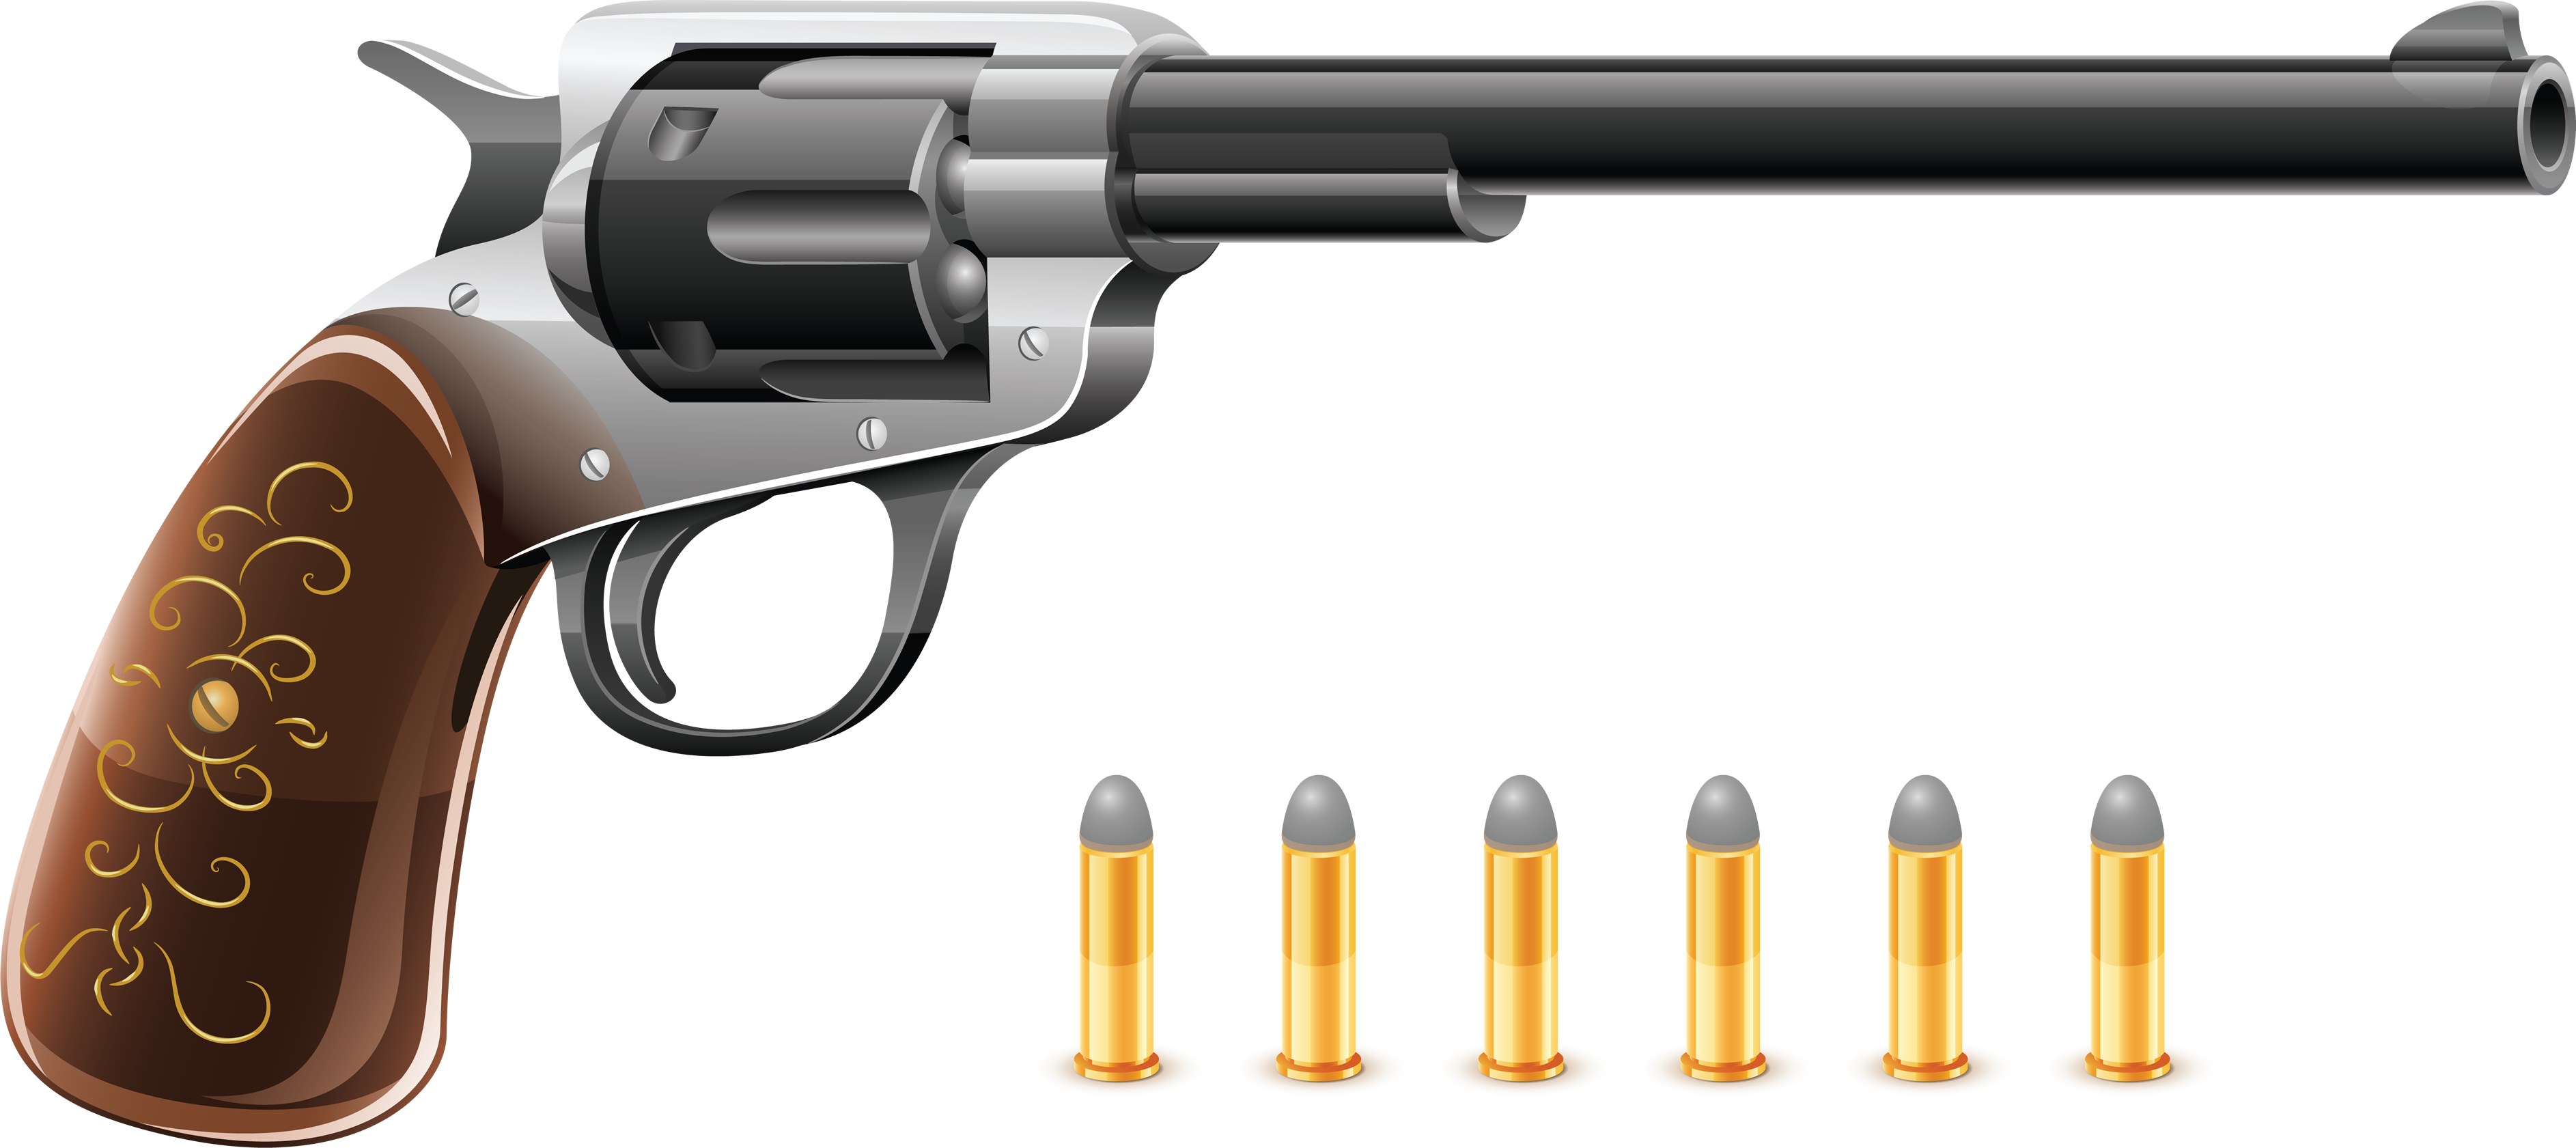 Revolver Colt Handgun Png Image - Weapon, Transparent background PNG HD thumbnail